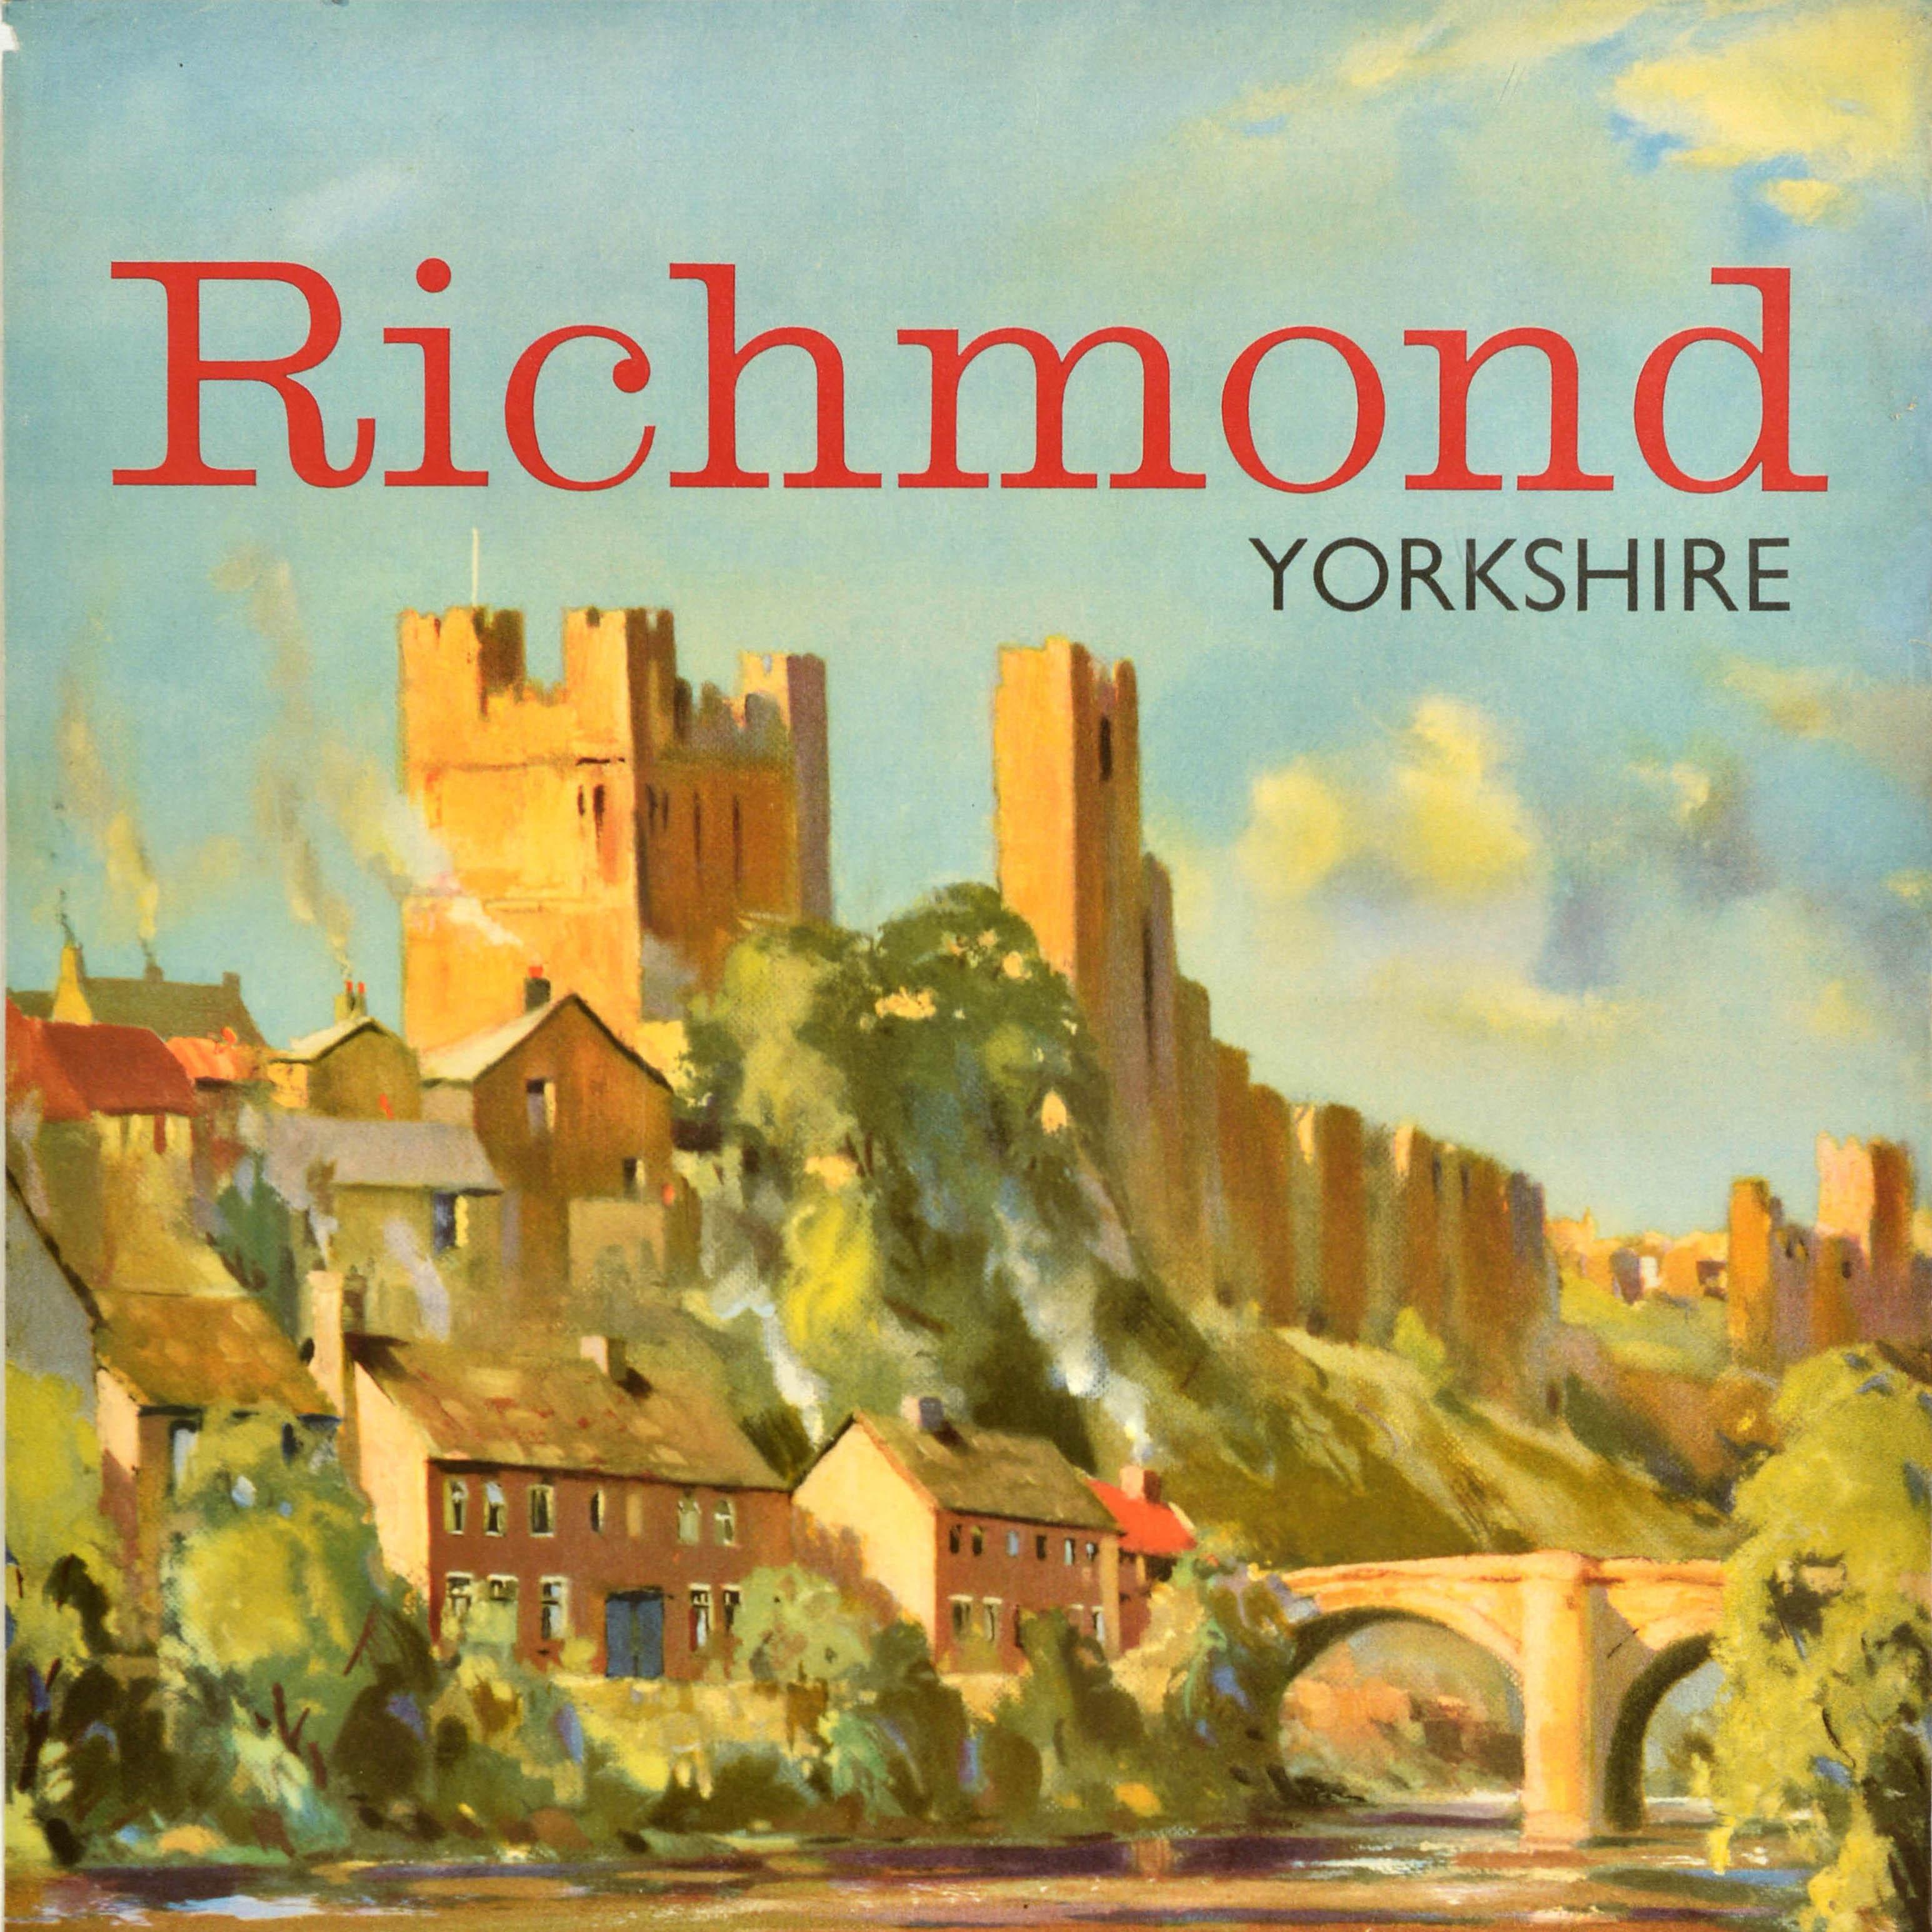 Original Vintage Railway Travel Poster Richmond Yorkshire British Rail Swaledale - Print by Edward Wesson